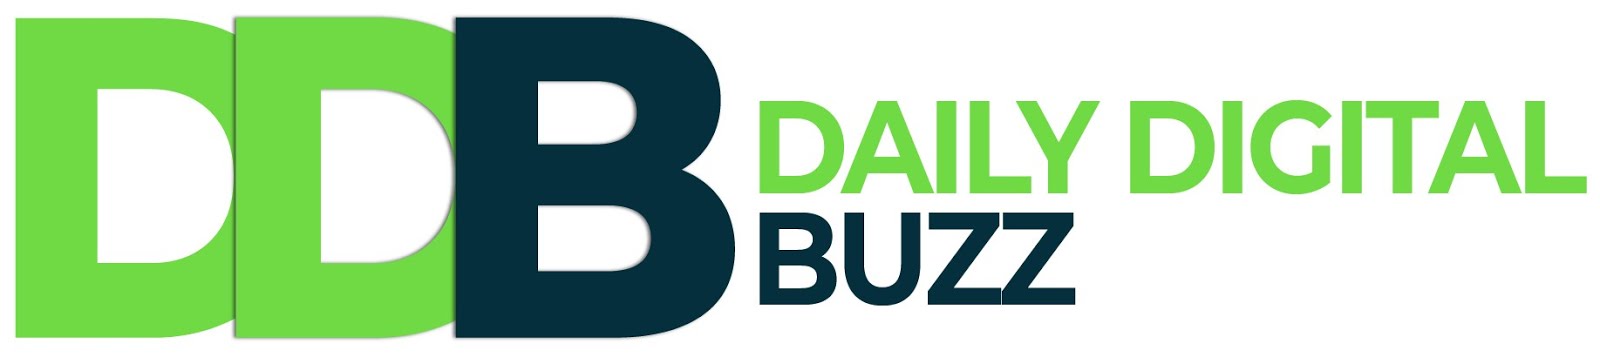 Best Digital Marketing Blog | Daily Digital Buzz